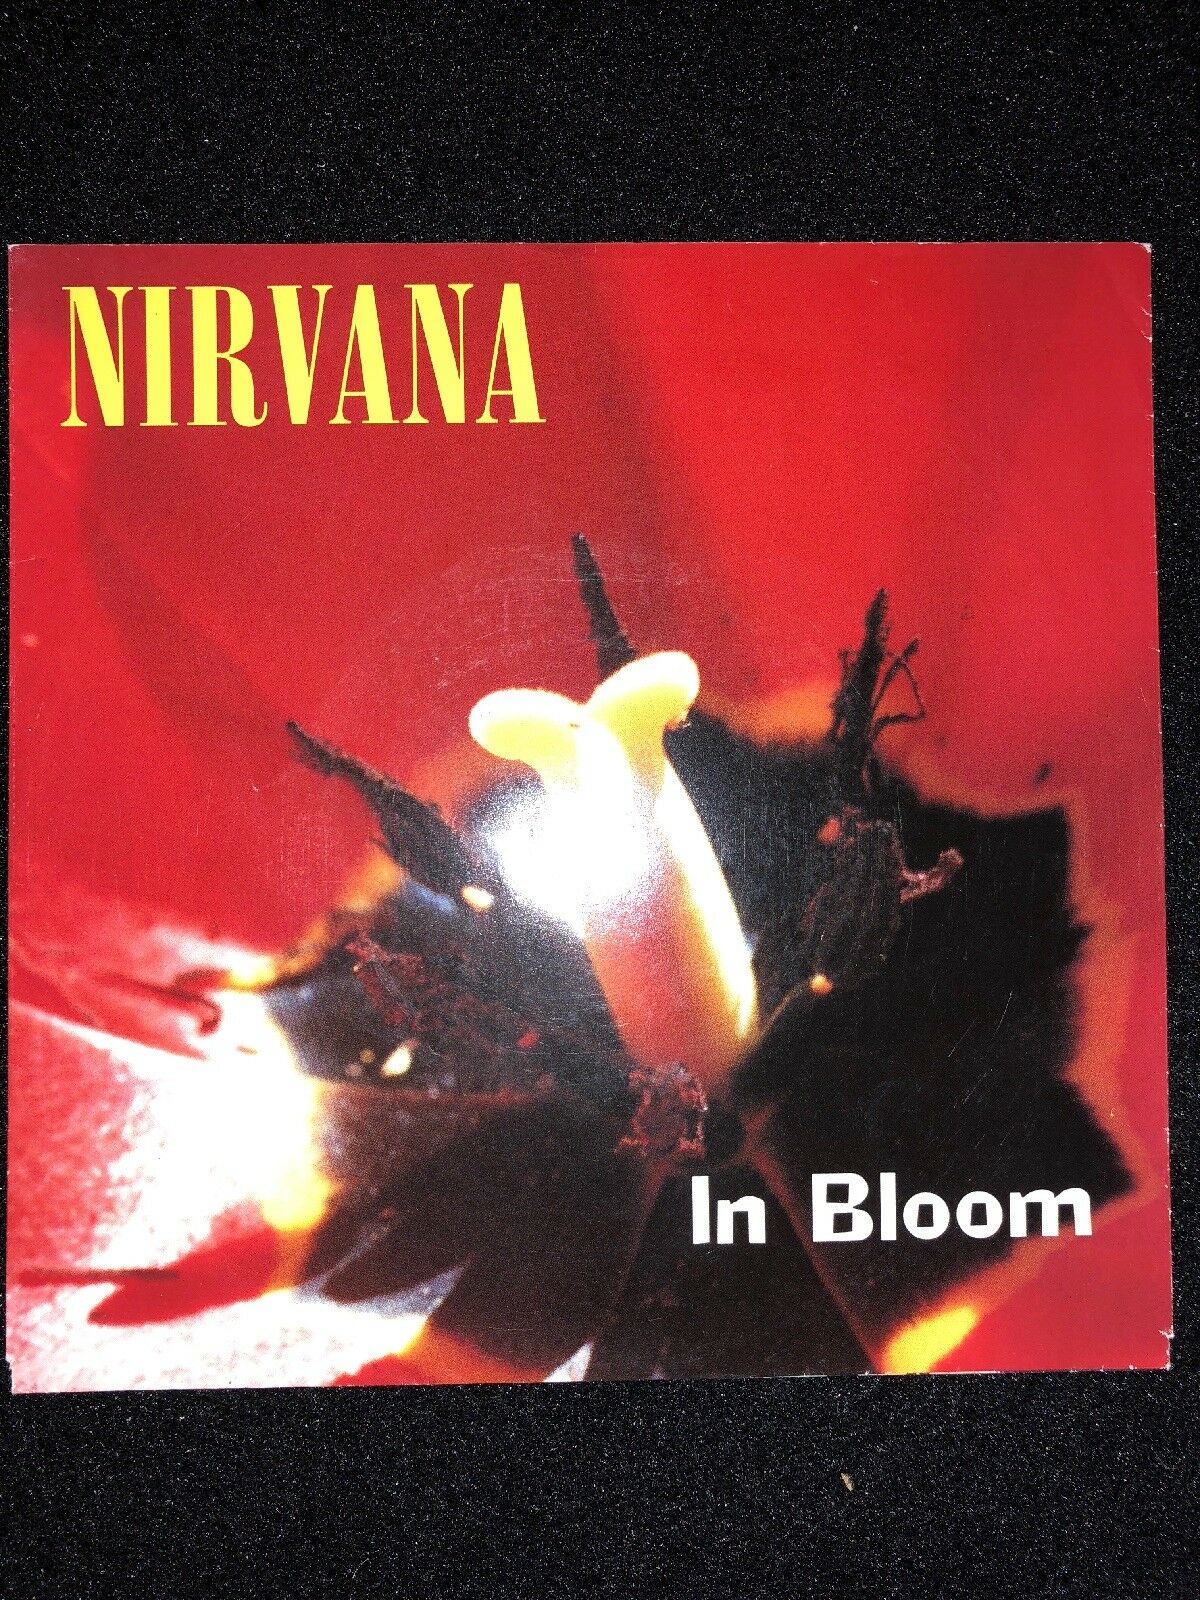 Holy Grail Dutch Nirvana 7” Record Single In Bloom Kurt Cobain Soundgarden Aic